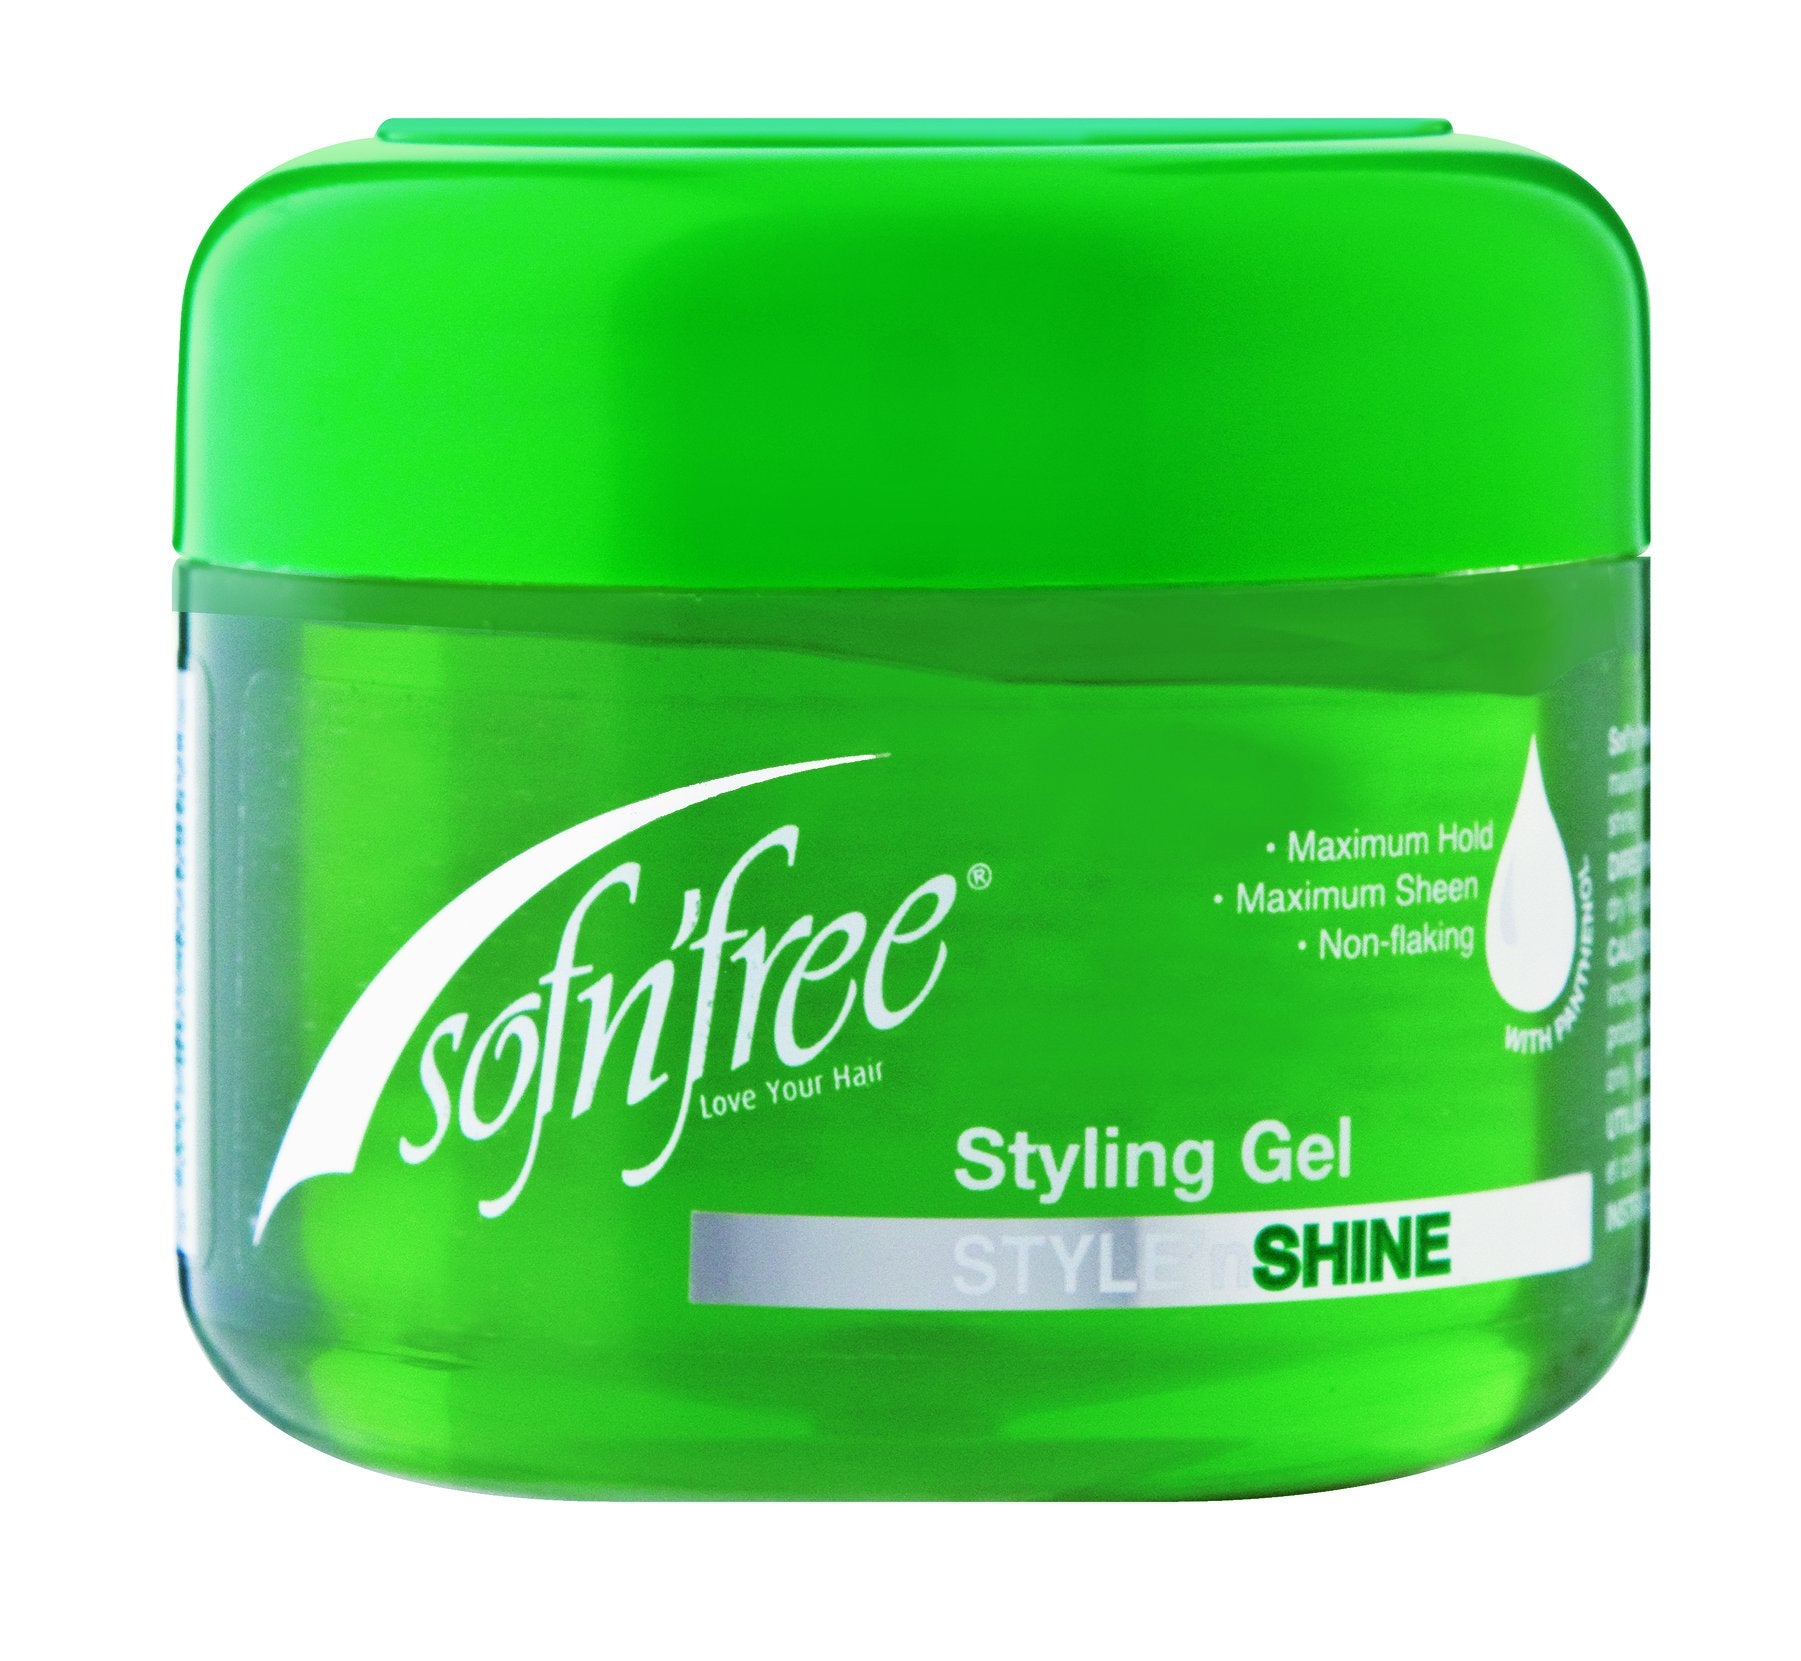 Sofnfree styling gel 250ml (Jar) 12-Pack